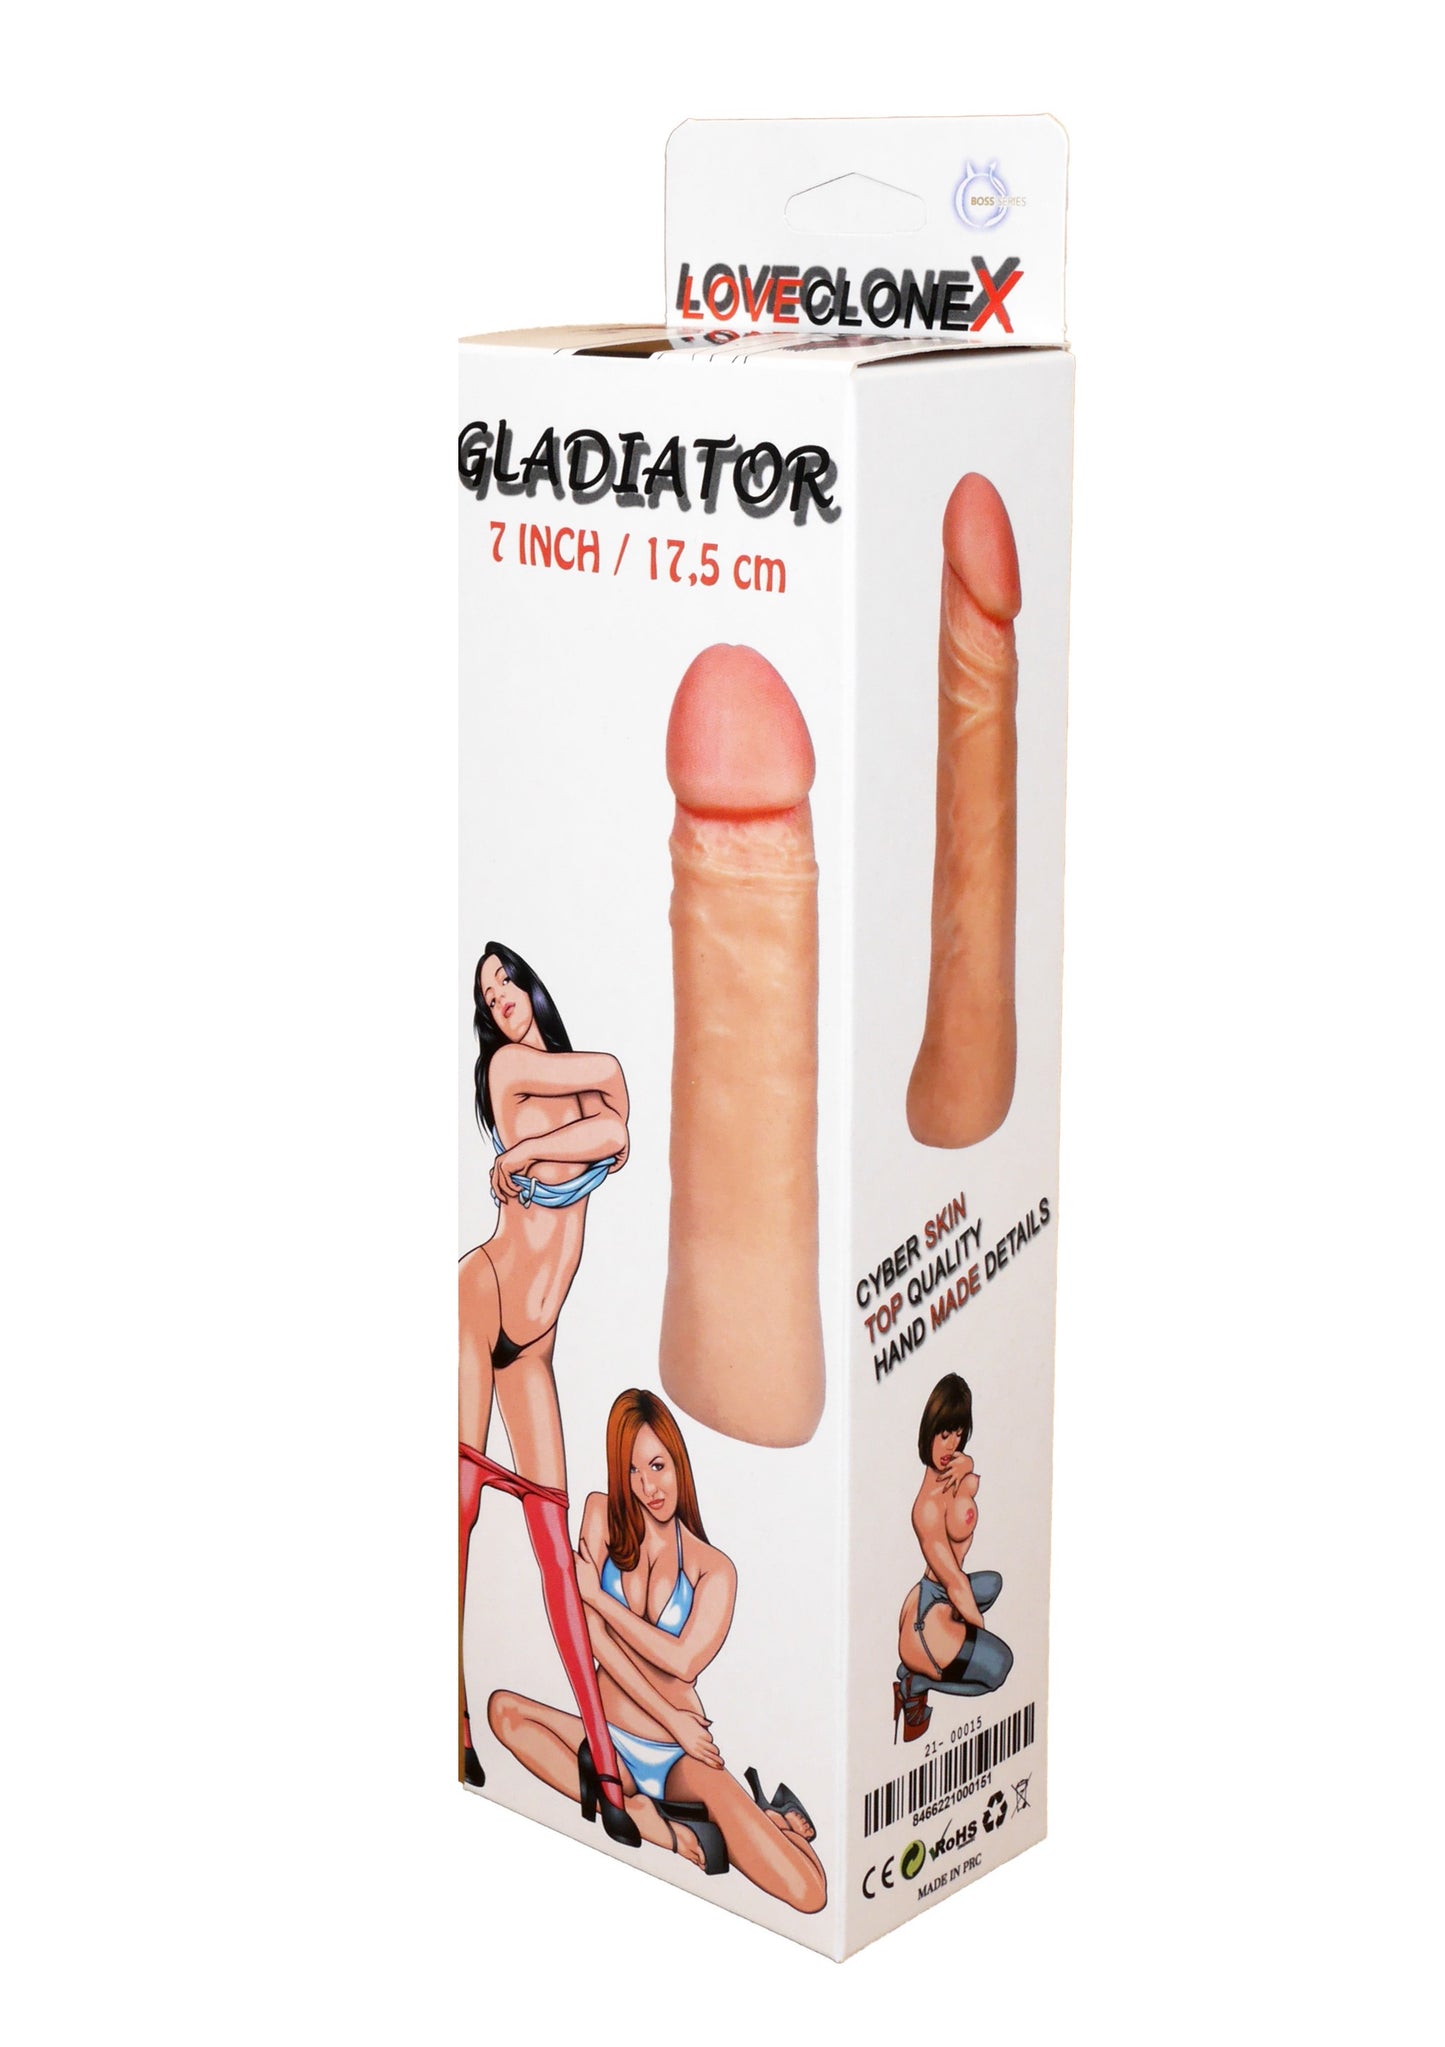 Bossoftoys Gladiator penis extender  7.0 inch / 18 cm - 21-00015